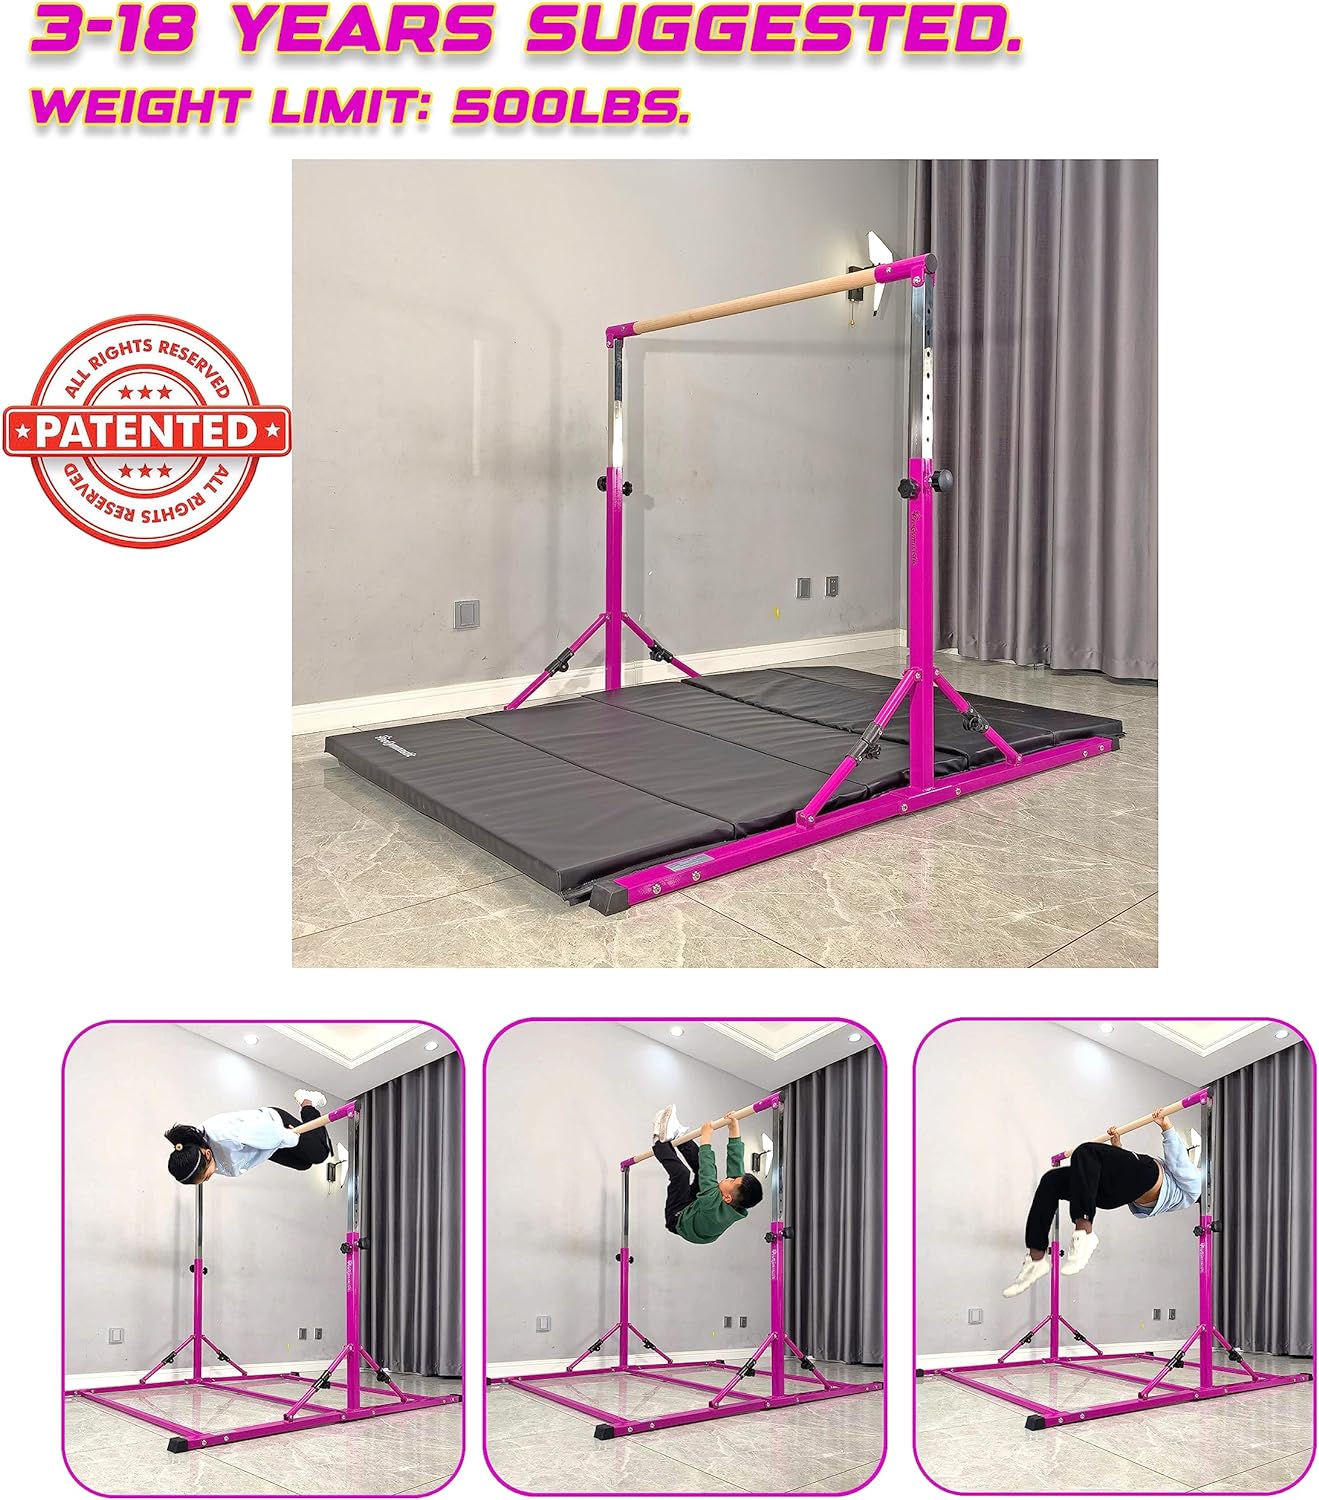 PreGymnastic Updated Gymnastic Bar 6 Ft Foldable and Portable Gymnastics bar